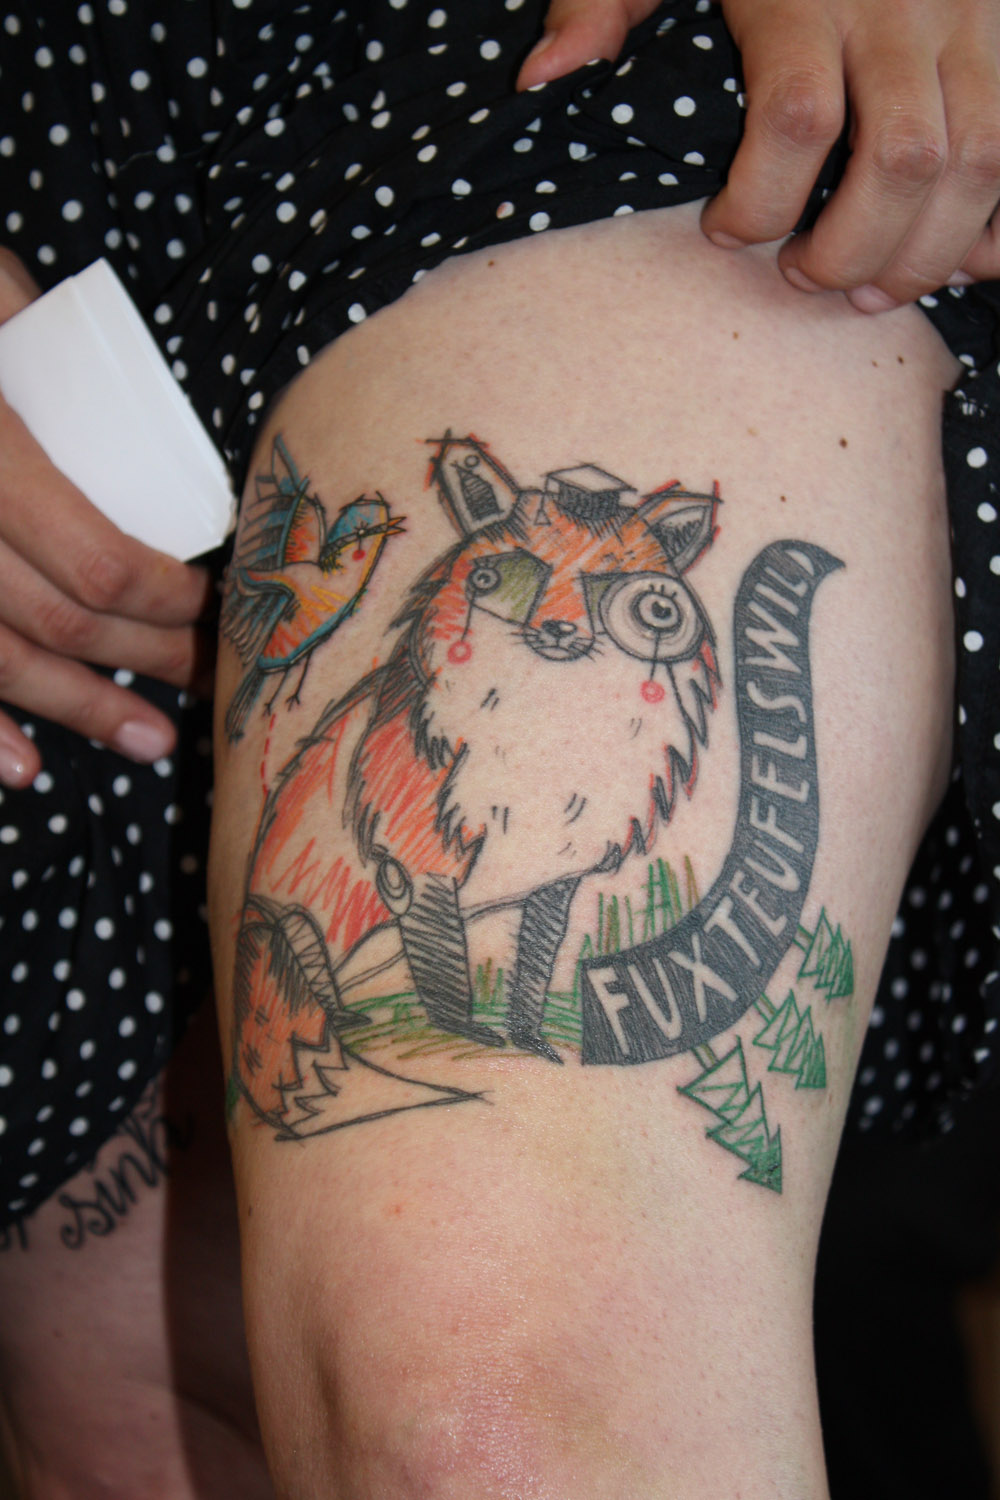 Internationale Tattoo Convention || "Fuxteufelswild"